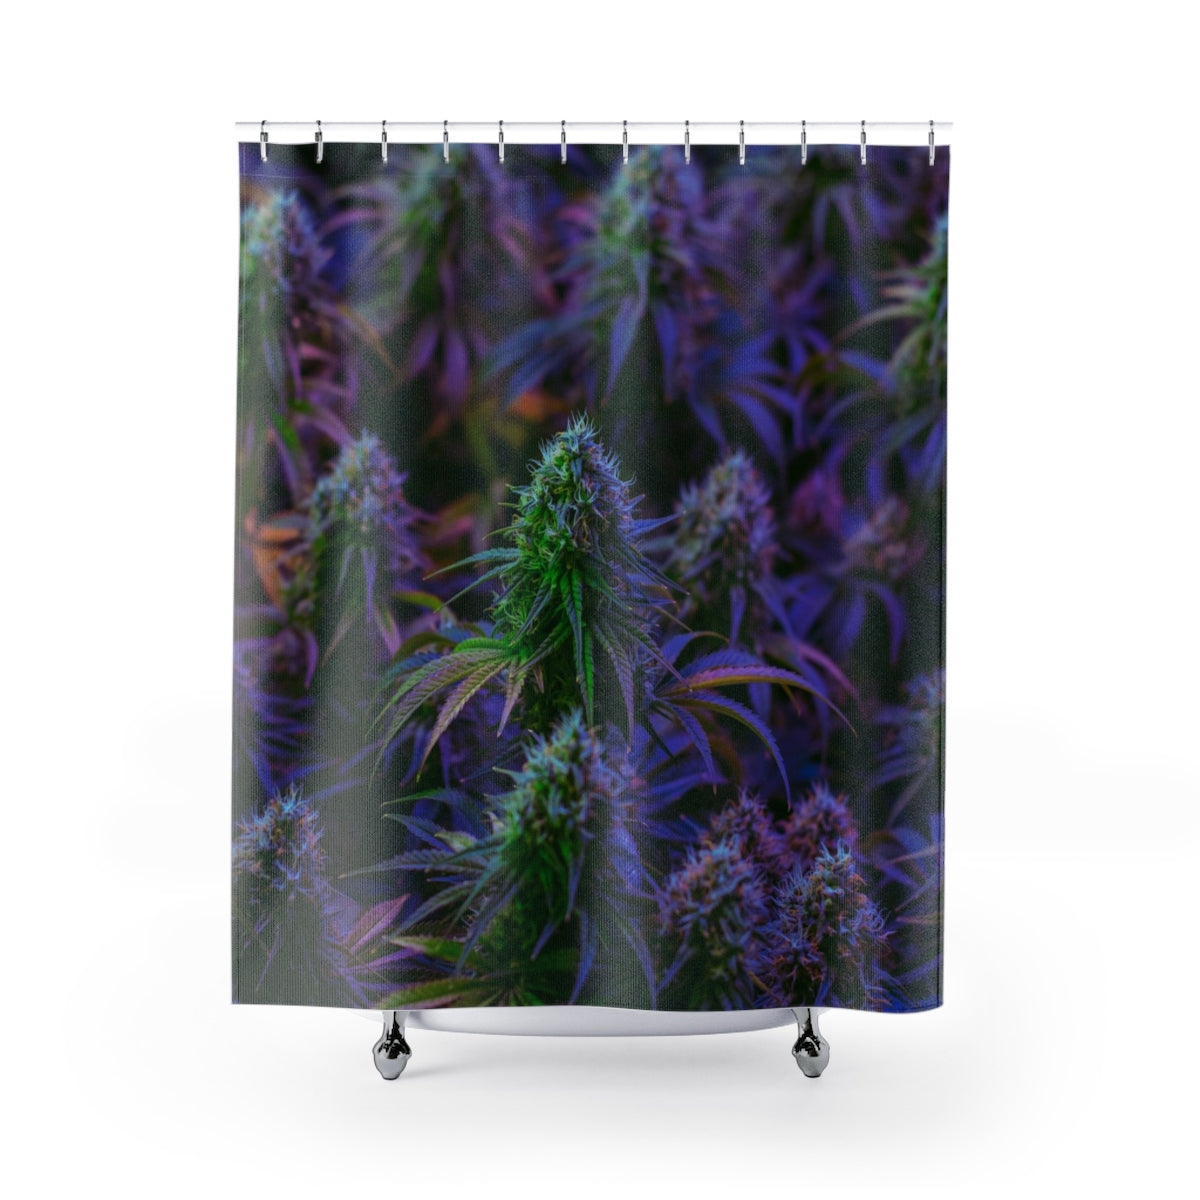 The Purple Cannabis Shower Curtain